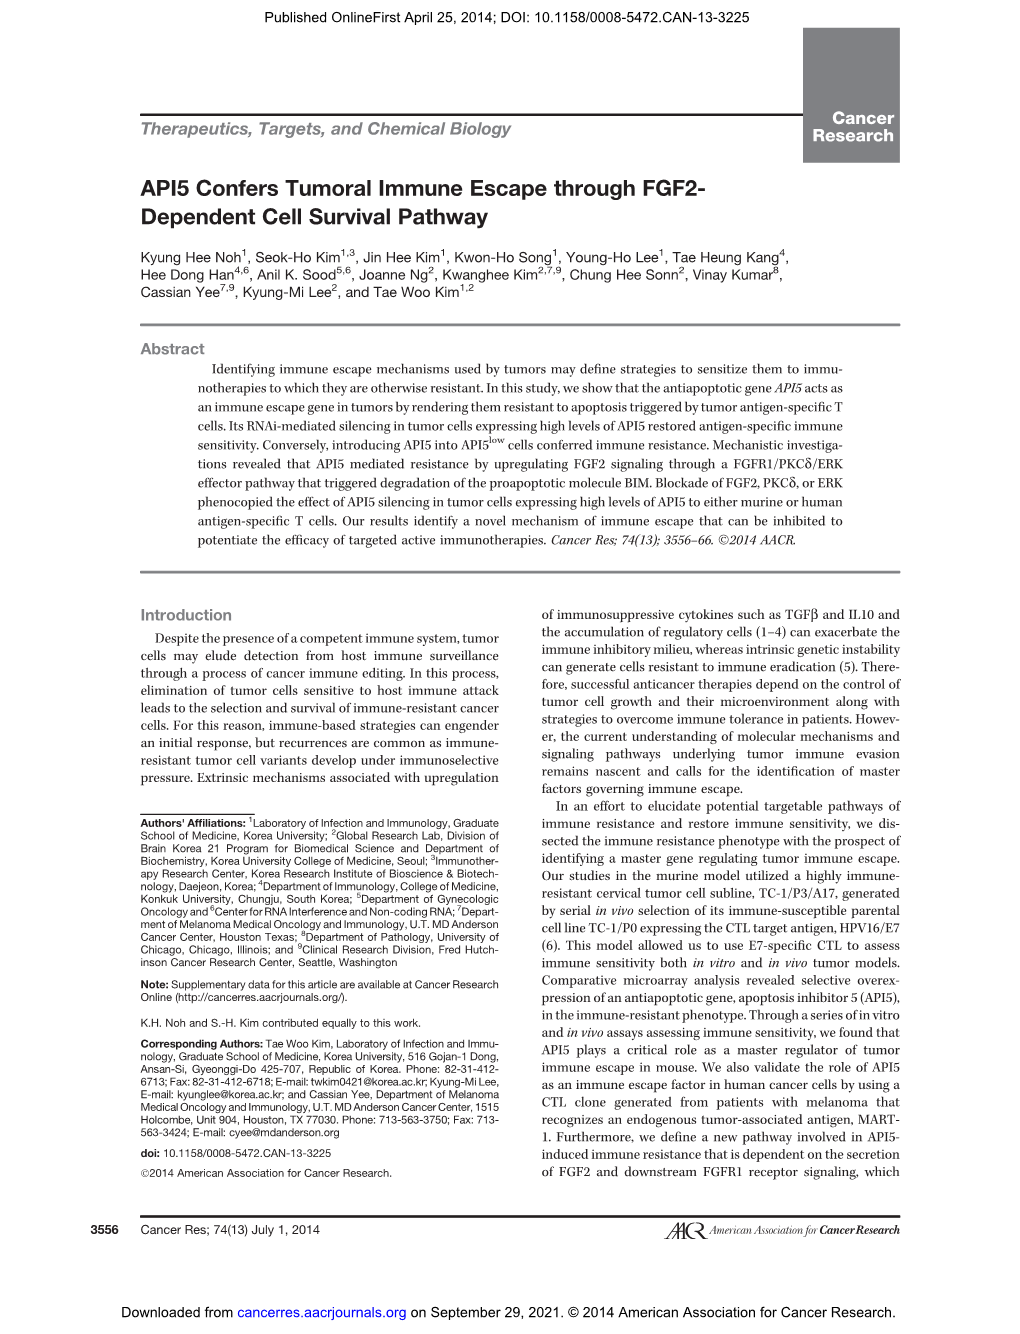 API5 Confers Tumoral Immune Escape Through FGF2- Dependent Cell Survival Pathway